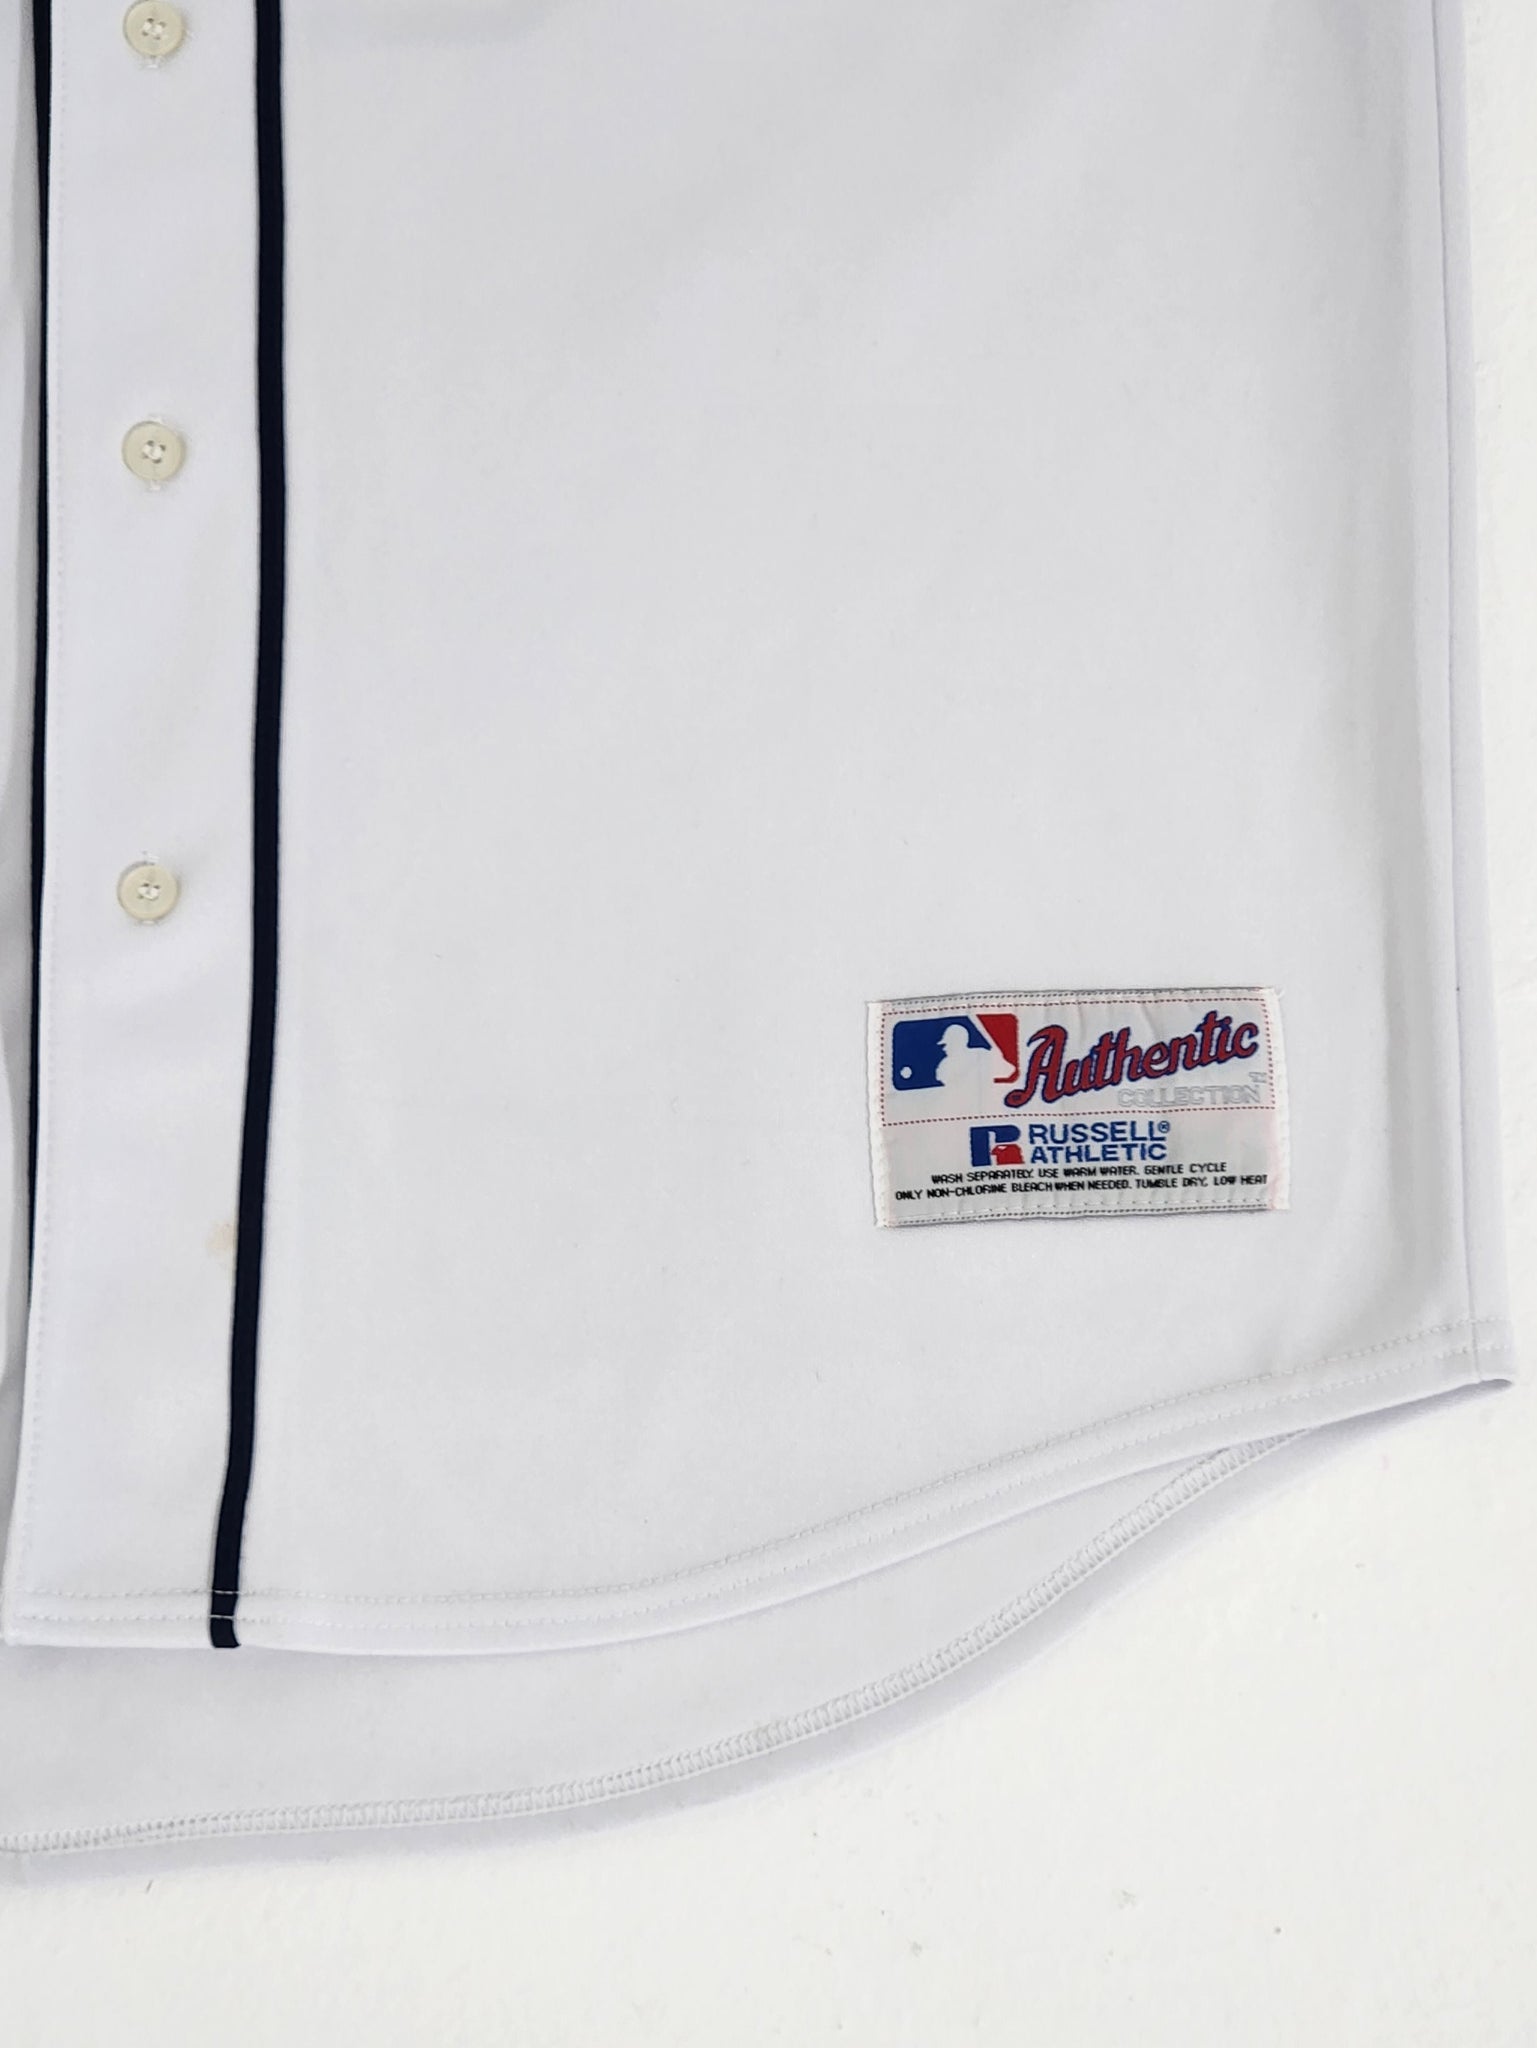 2001 Seattle Mariners “MLB 100th Year Anniversary” Stitched Ichiro Suzuki Home Jersey Sz. 2XL